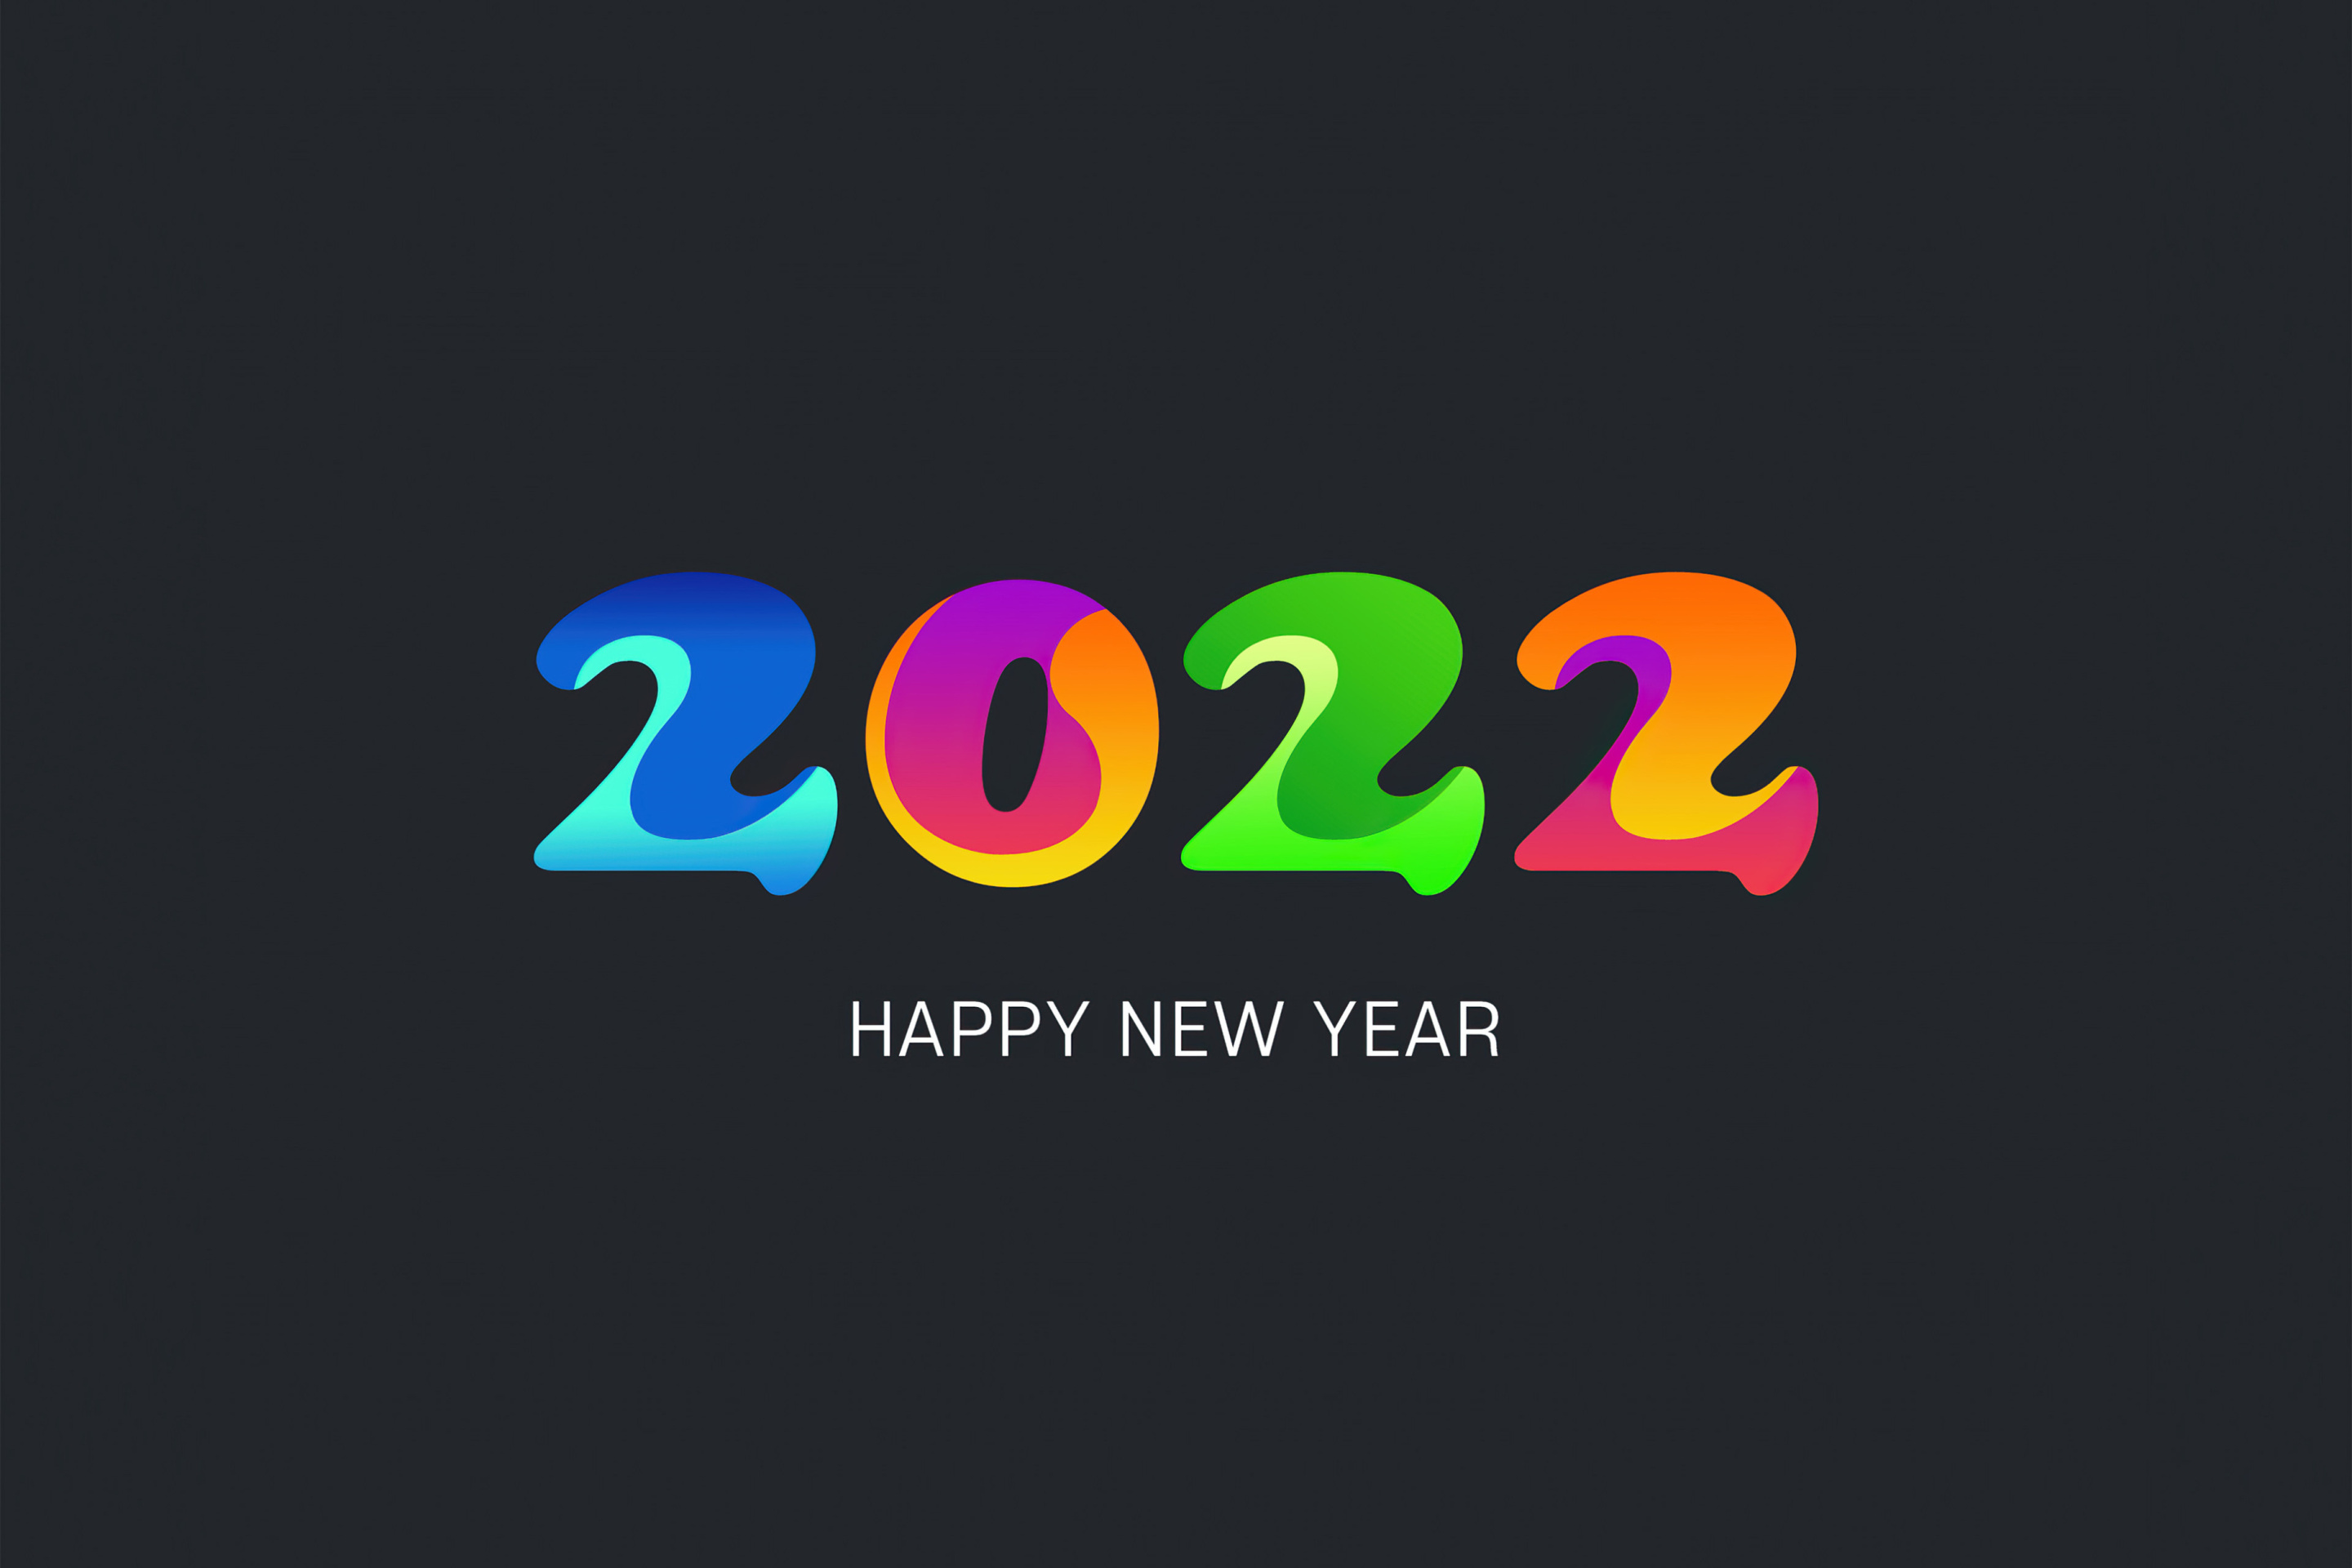 Happy new year 2022 wallpaper 2880x1920